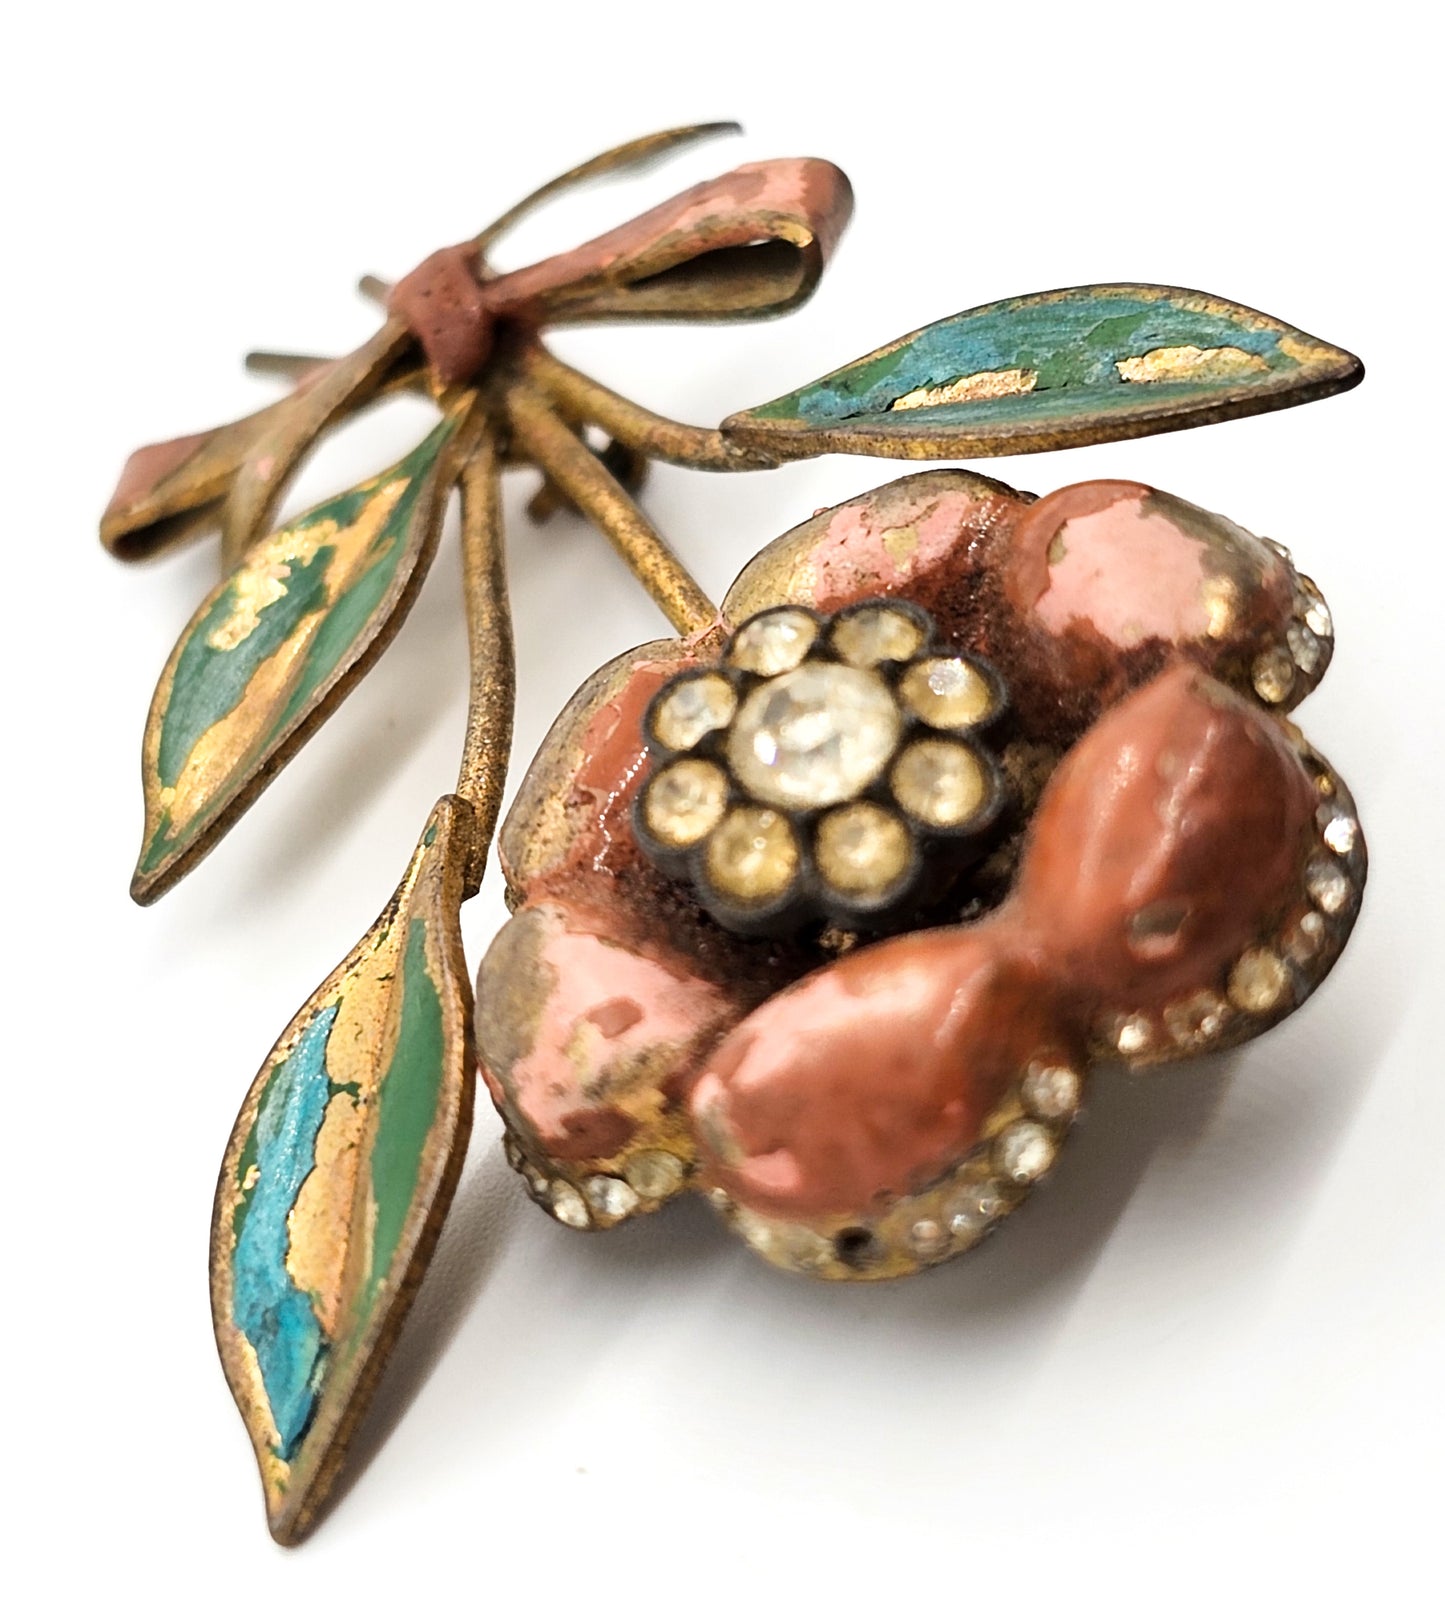 Coro Trembler Art Deco flower with ribbon vintage rhinestone brooch